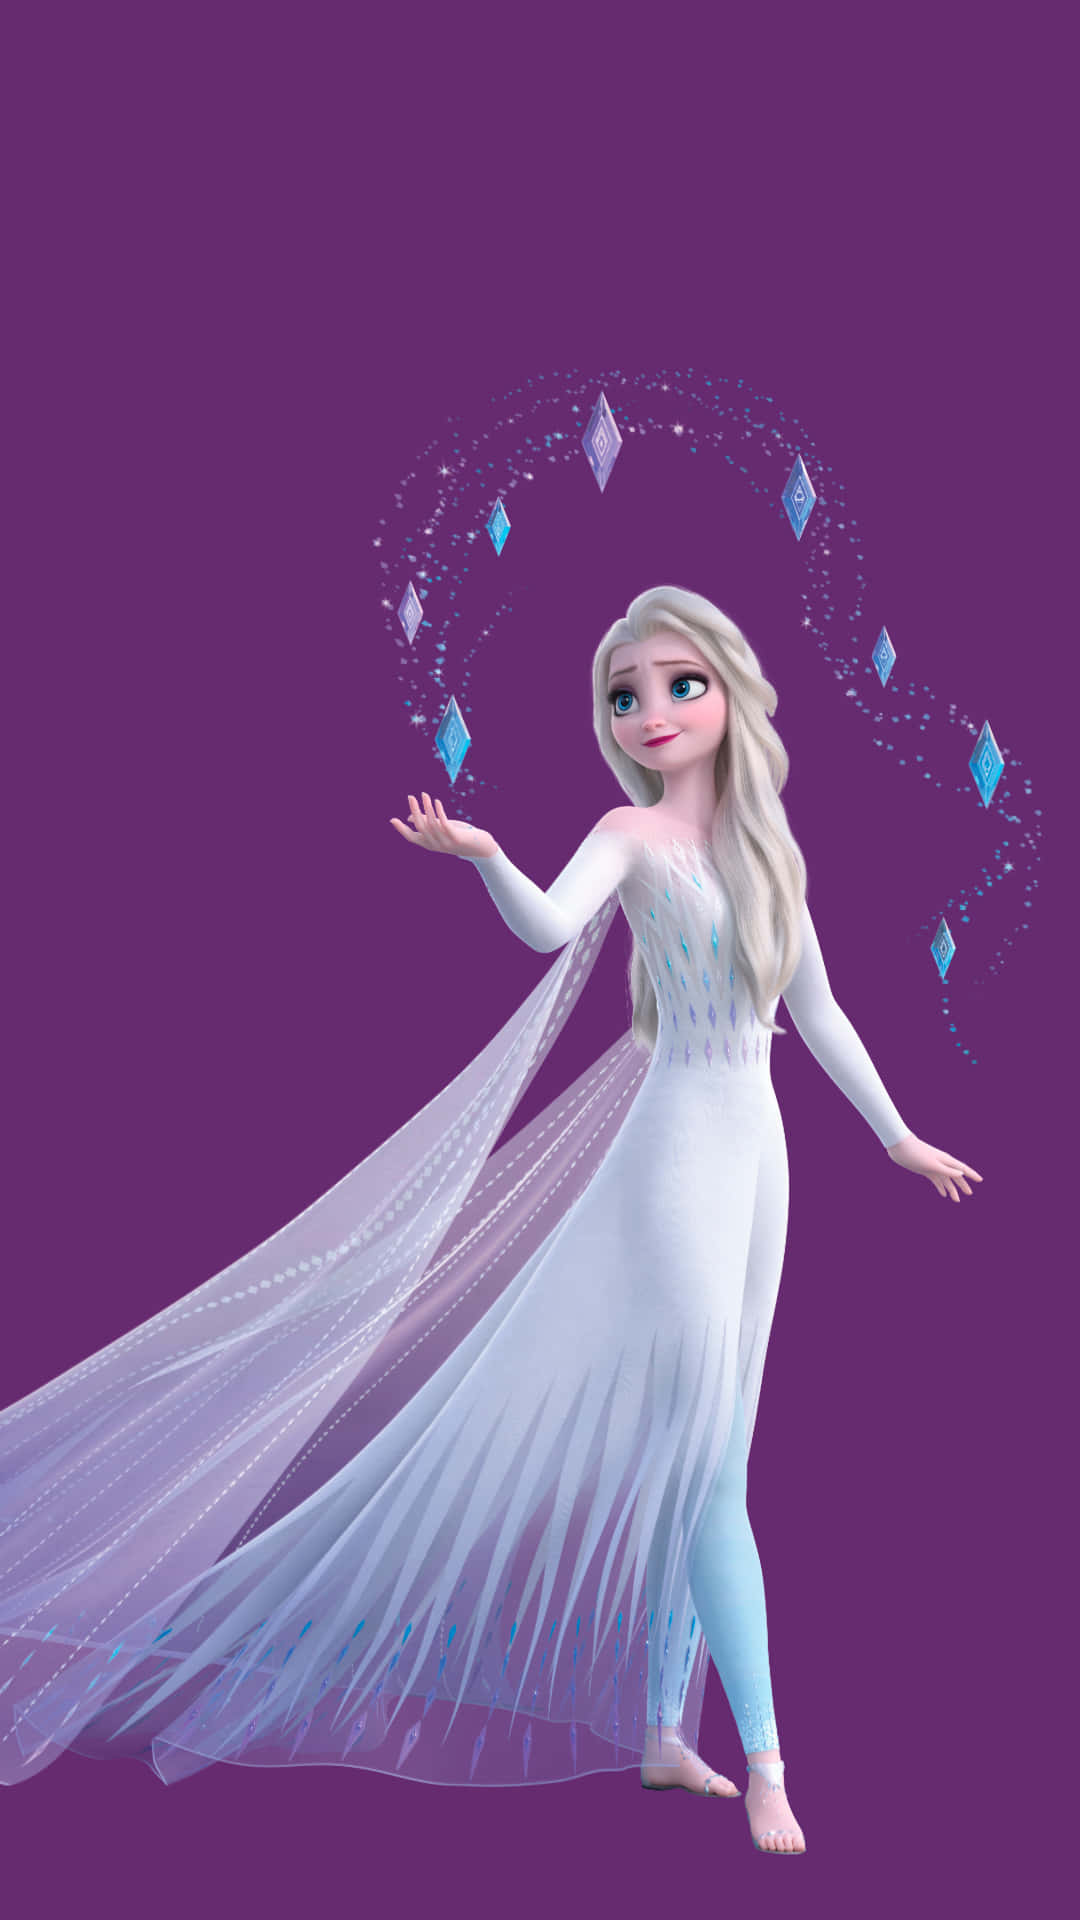 Imagenelsa Luce Un Hermoso Vestido Blanco Por Primera Vez En Frozen 2 De Disney. Fondo de pantalla